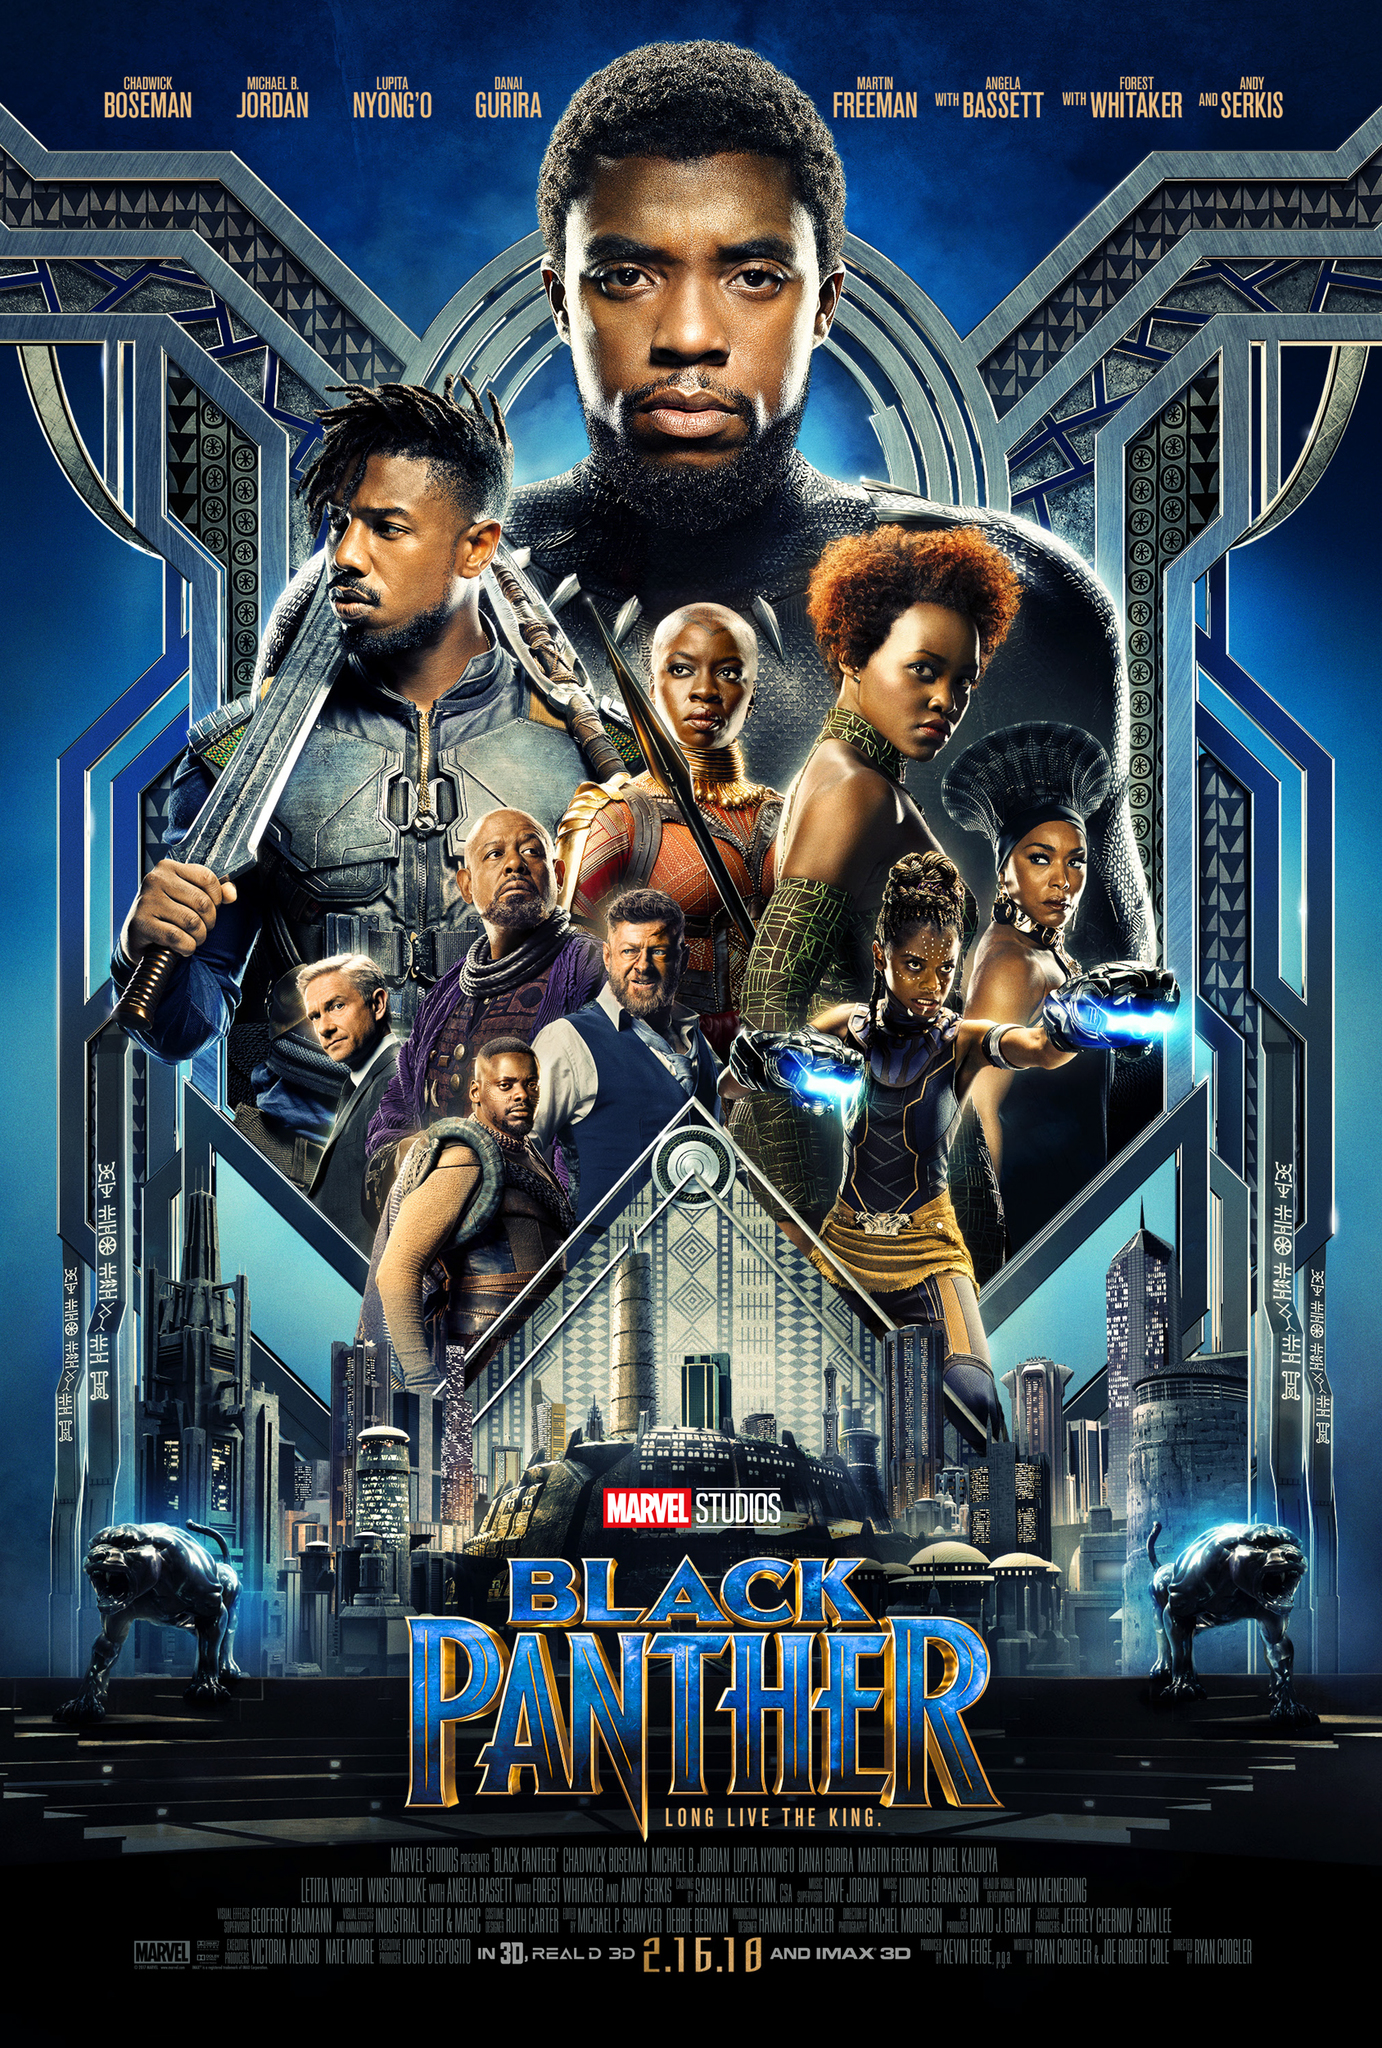 Tonight's Movie: Black Panther (PG-13)